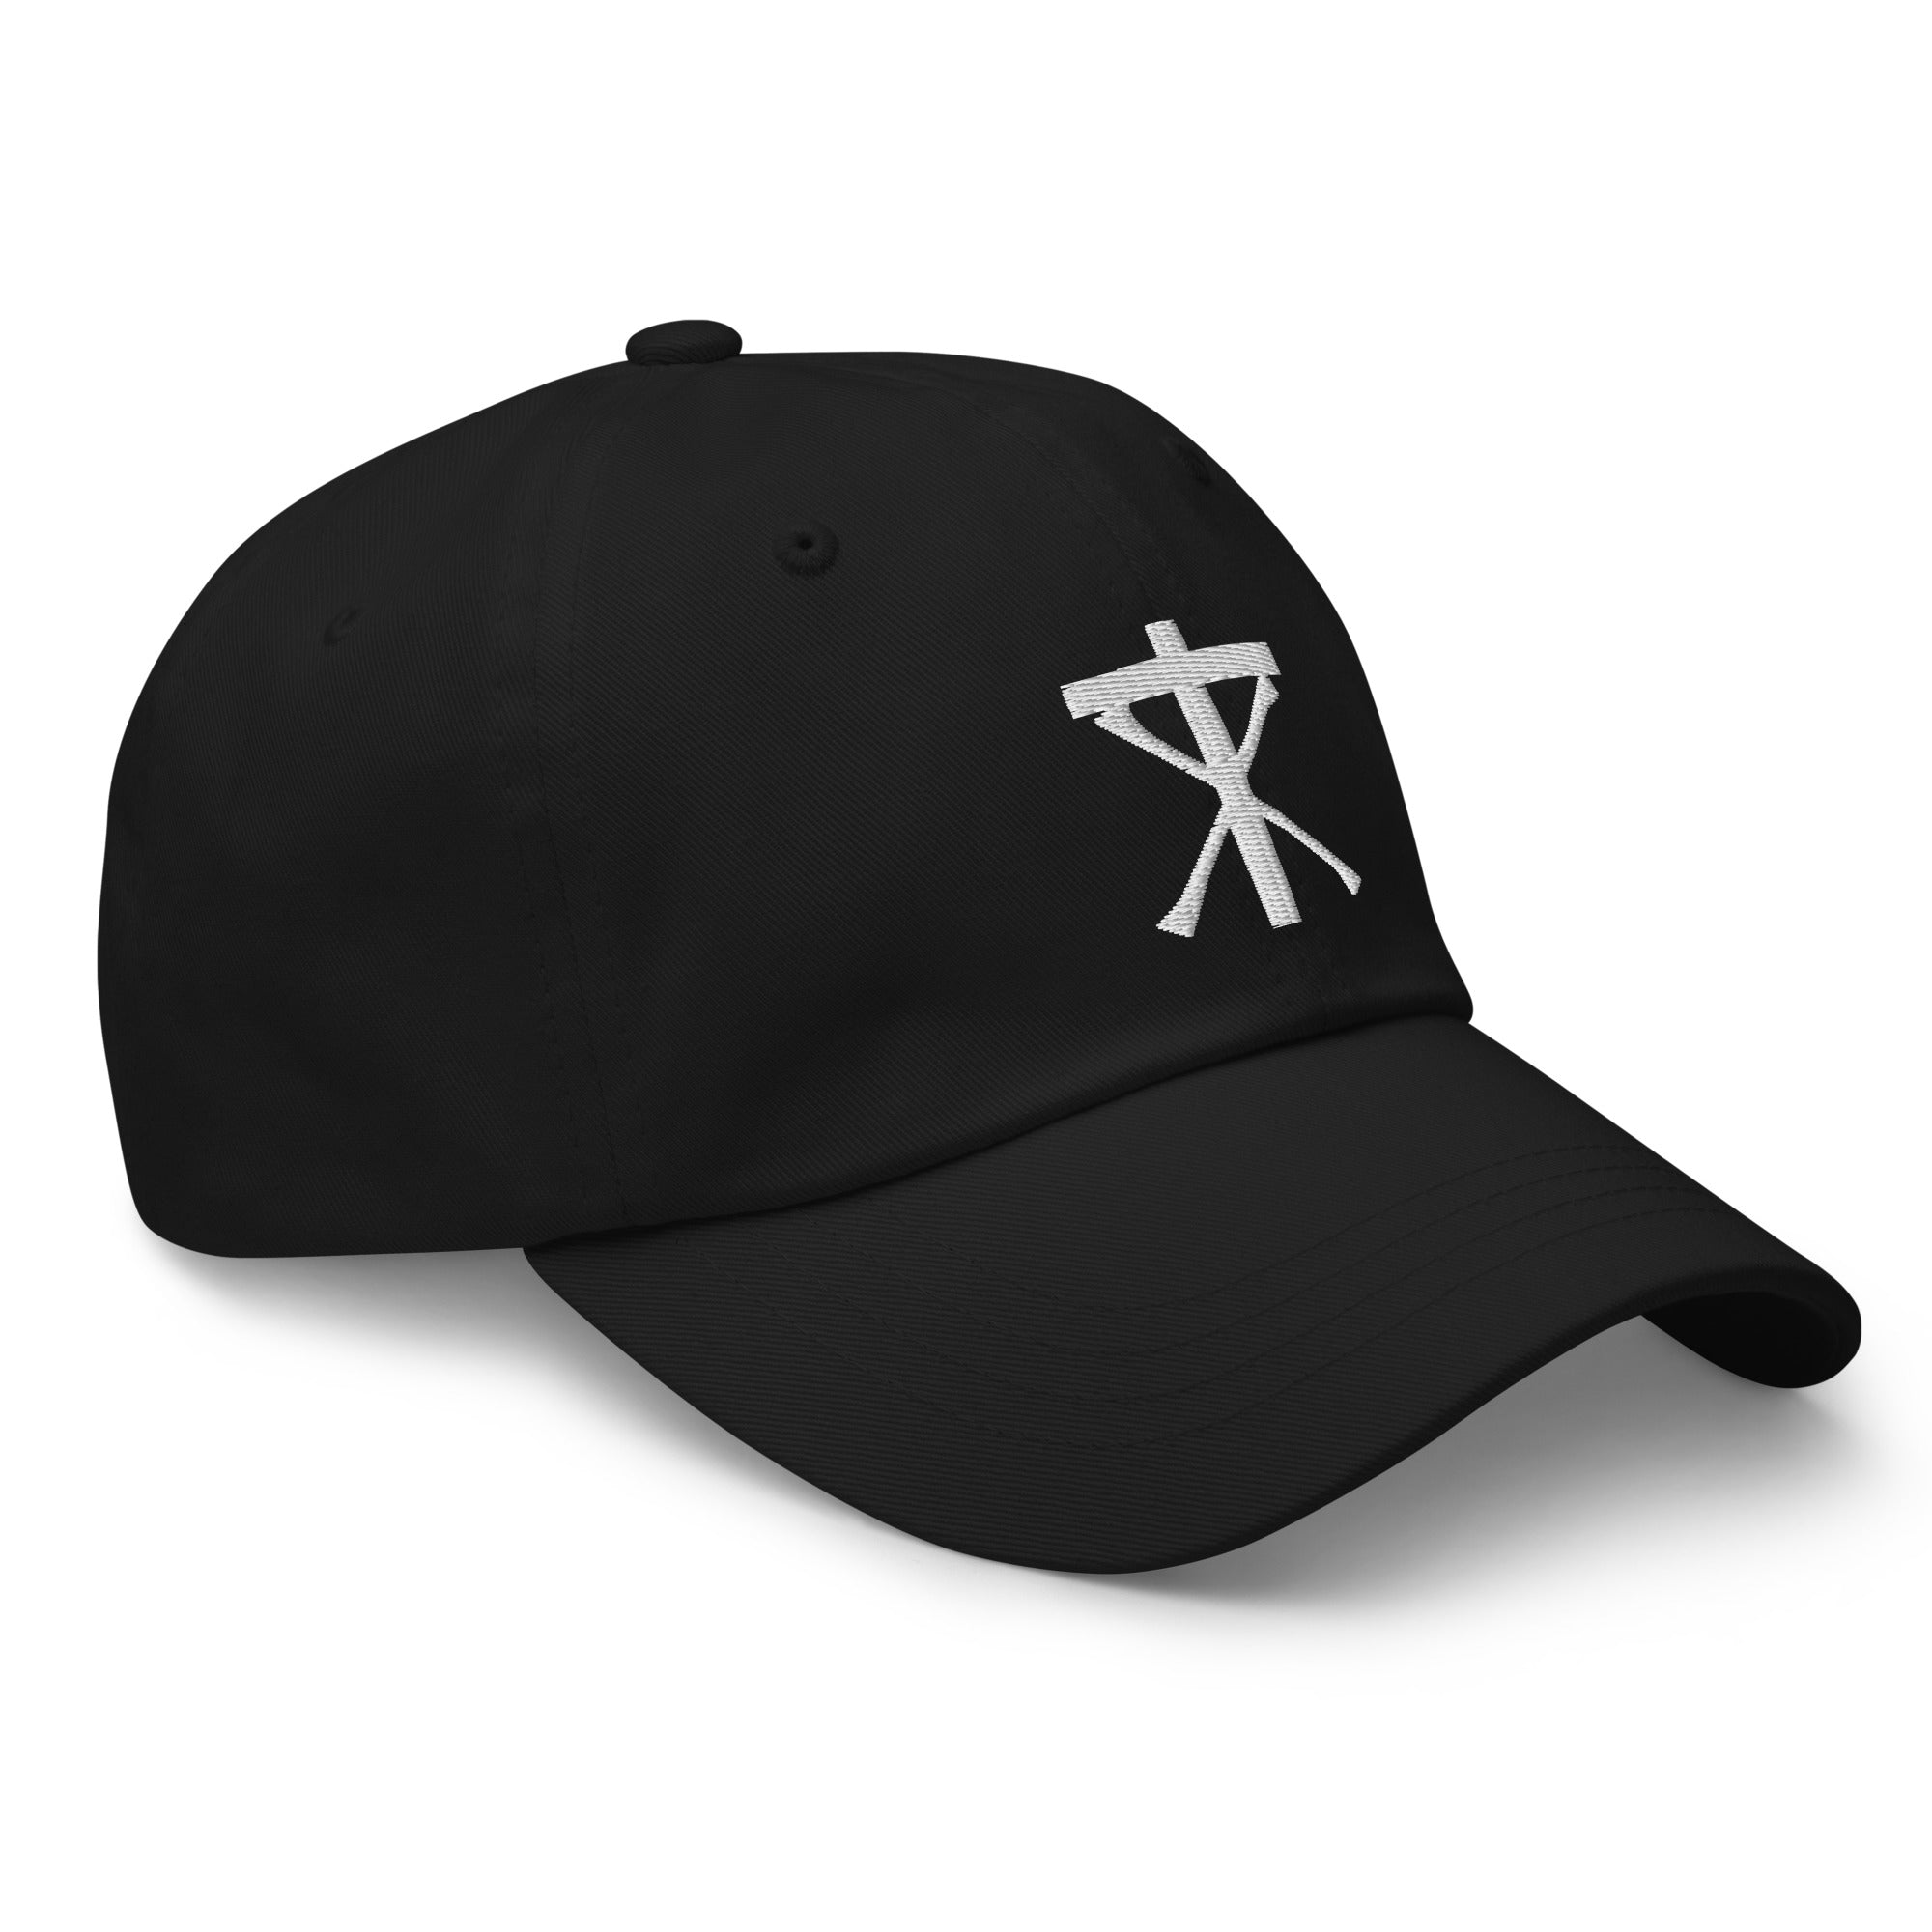 Anti Christian Bone Cross Embroidered Baseball Cap Dad hat Atheist Symbol - Edge of Life Designs